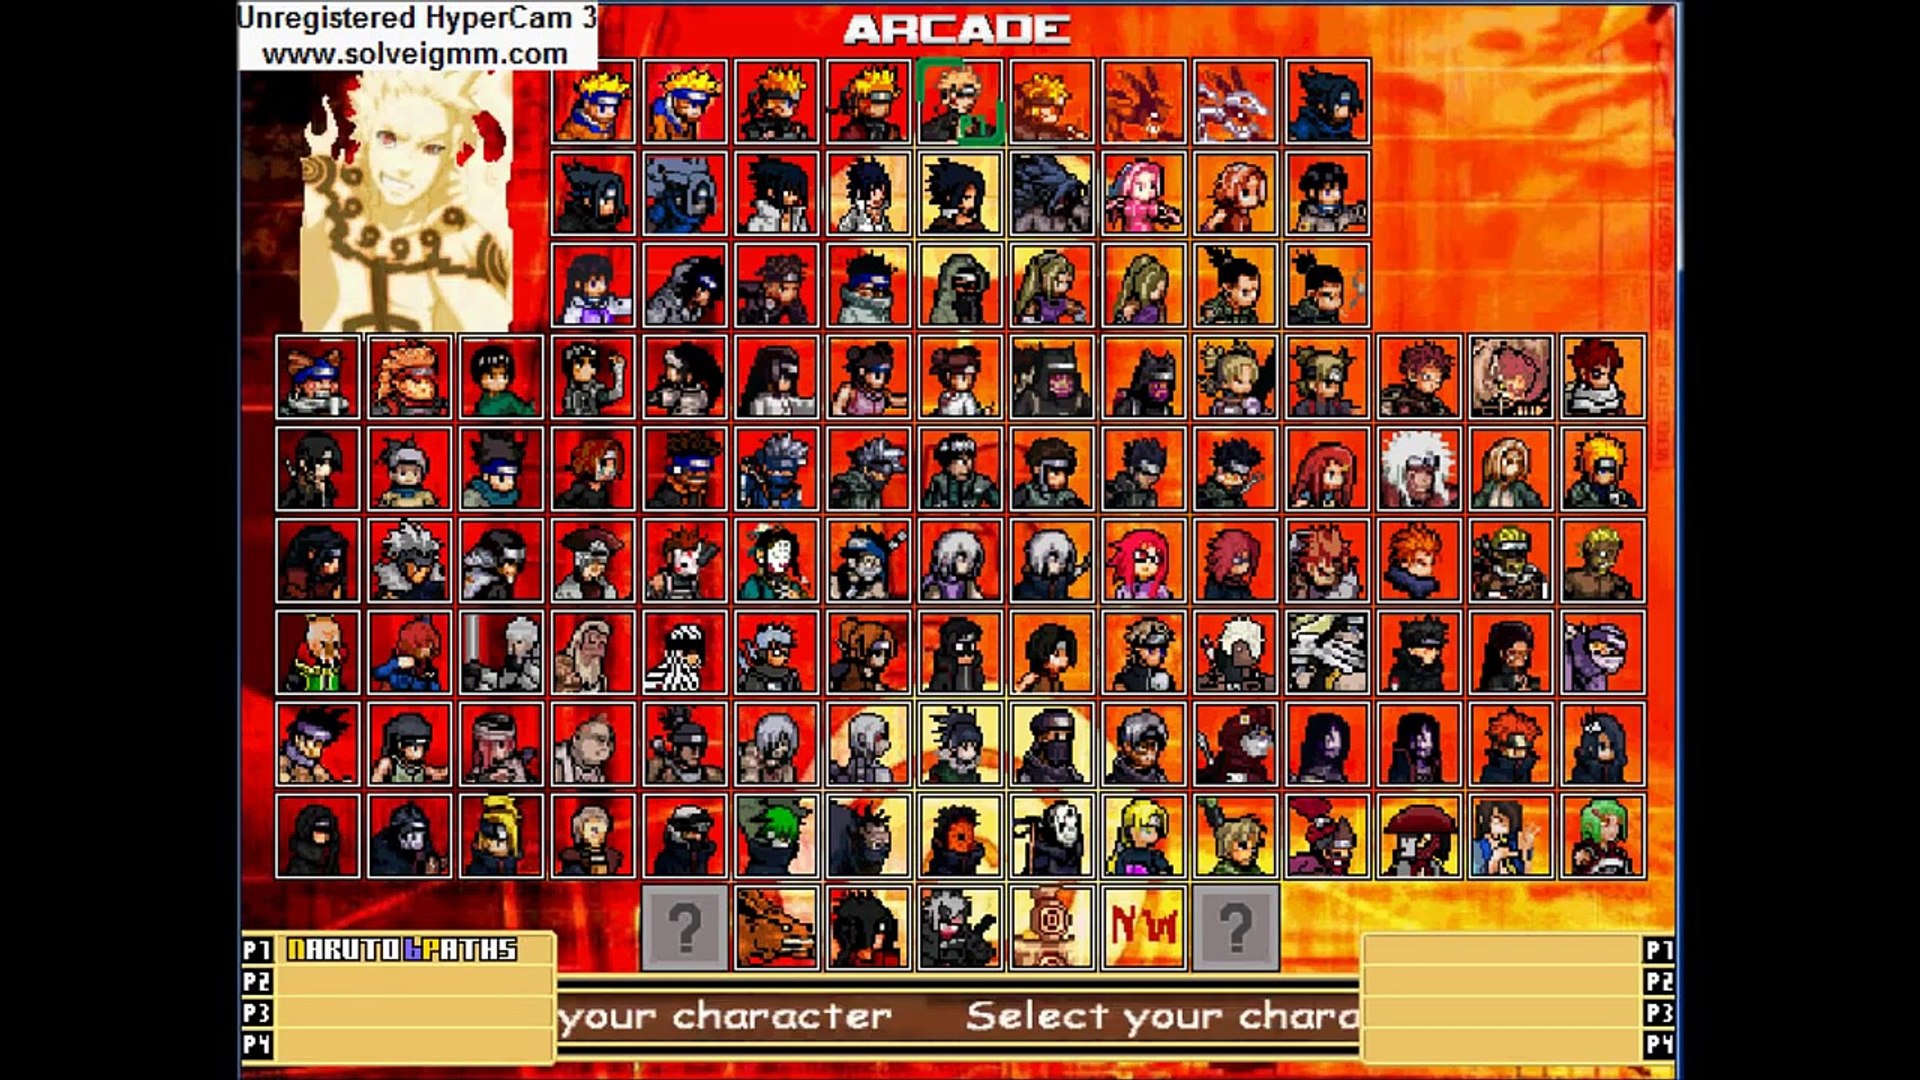 Category:Naruto Characters, MUGEN Database